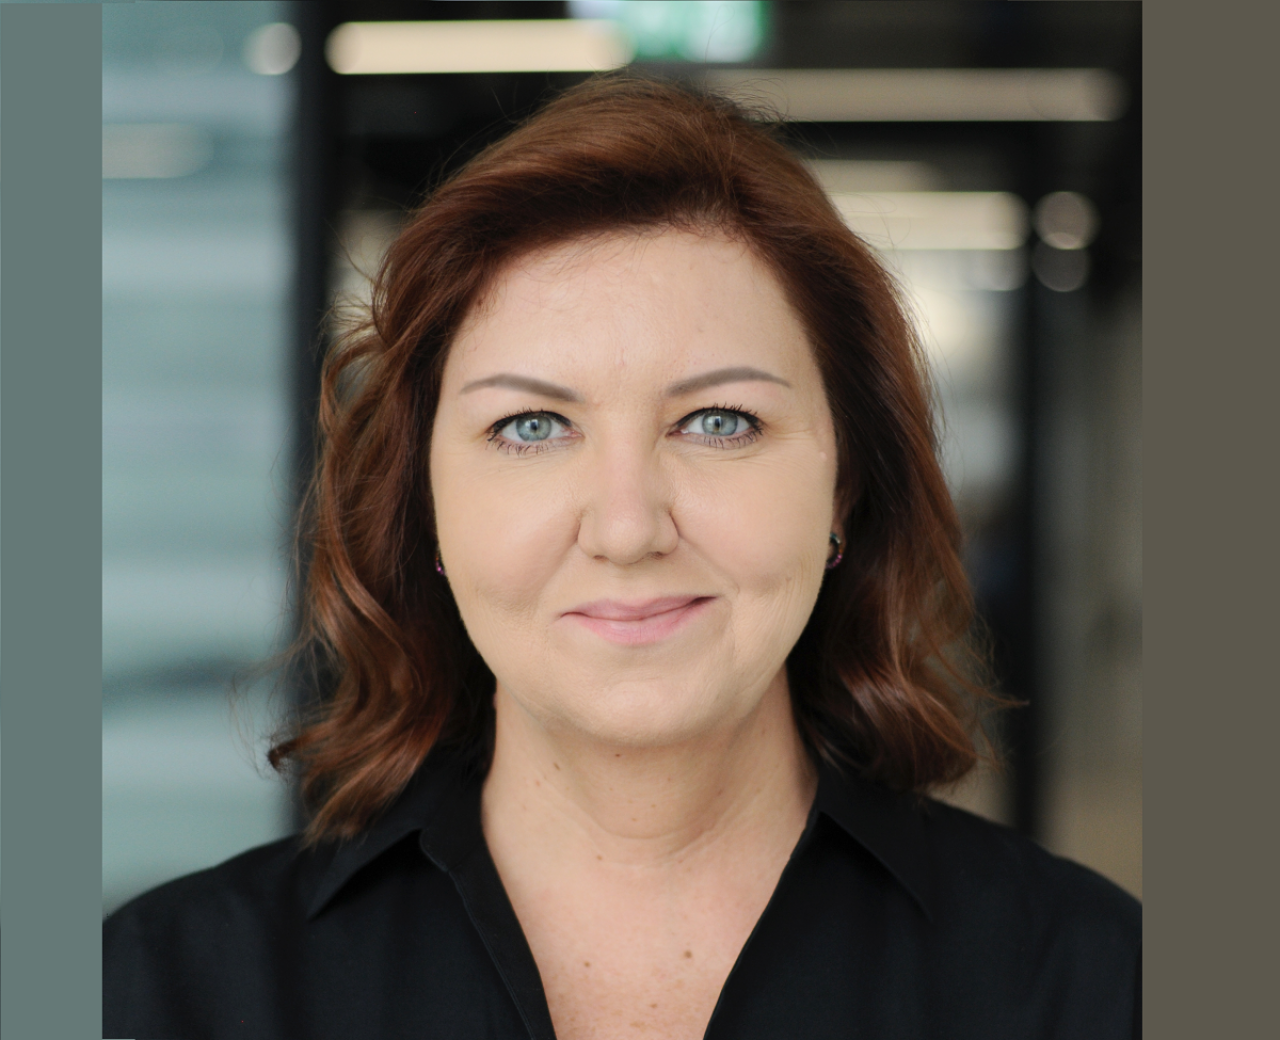 Ewa Michalska, dyrektor operacyjna Grafton Recruitment